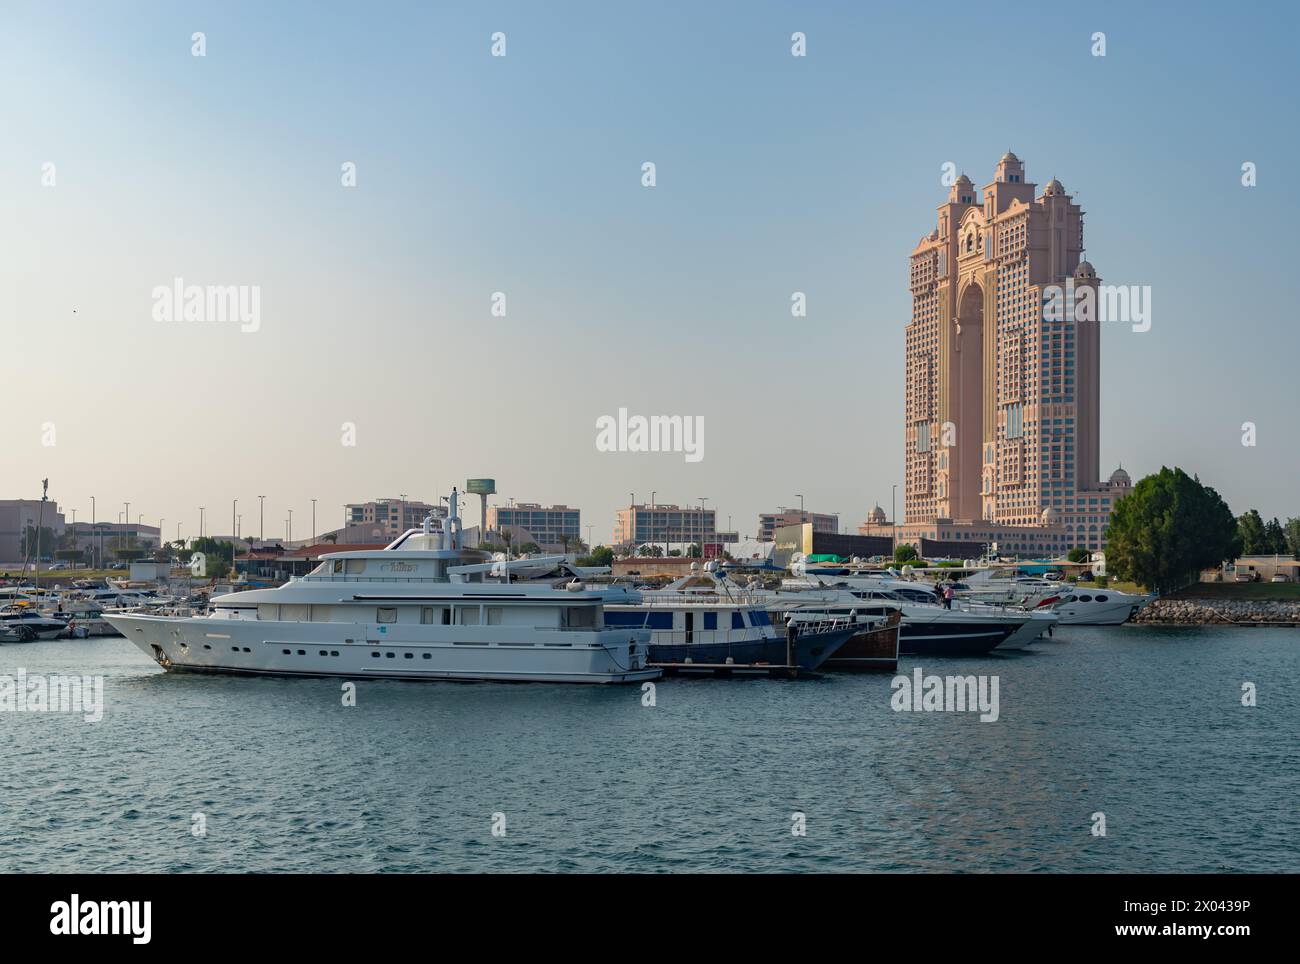 Ein Bild vom Rixos Marina Abu Dhabi Hotel und den Yachten an der Abu Dhabi Marina an der Abu Dhabi Breakwater. Stockfoto